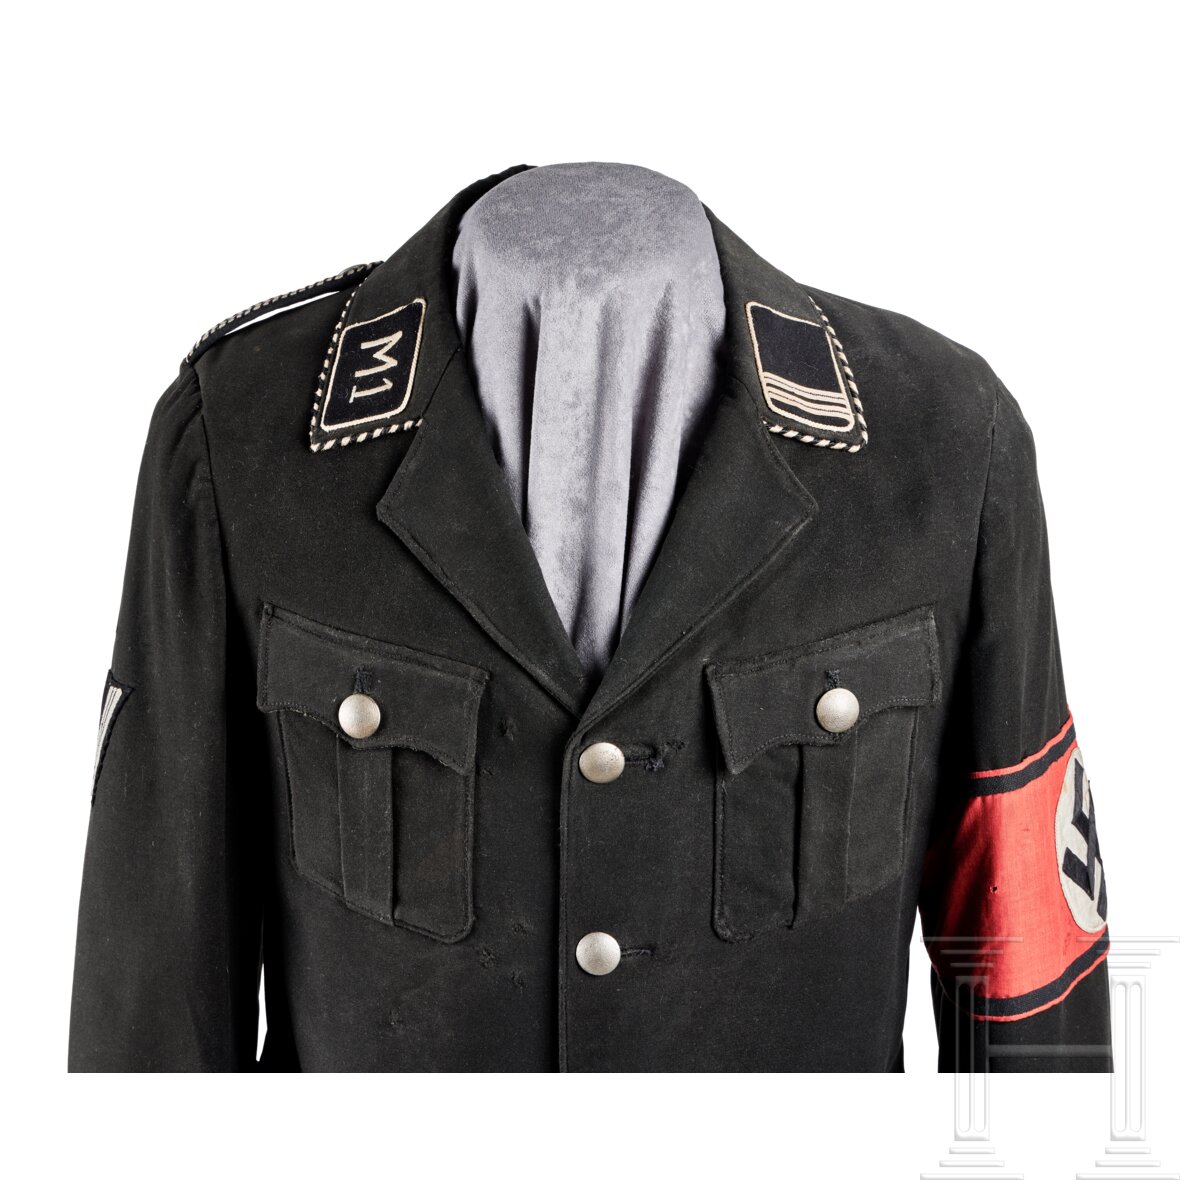 A Service Uniform for a Rottenführer of Motorstandarte 1 "München" - Image 4 of 15